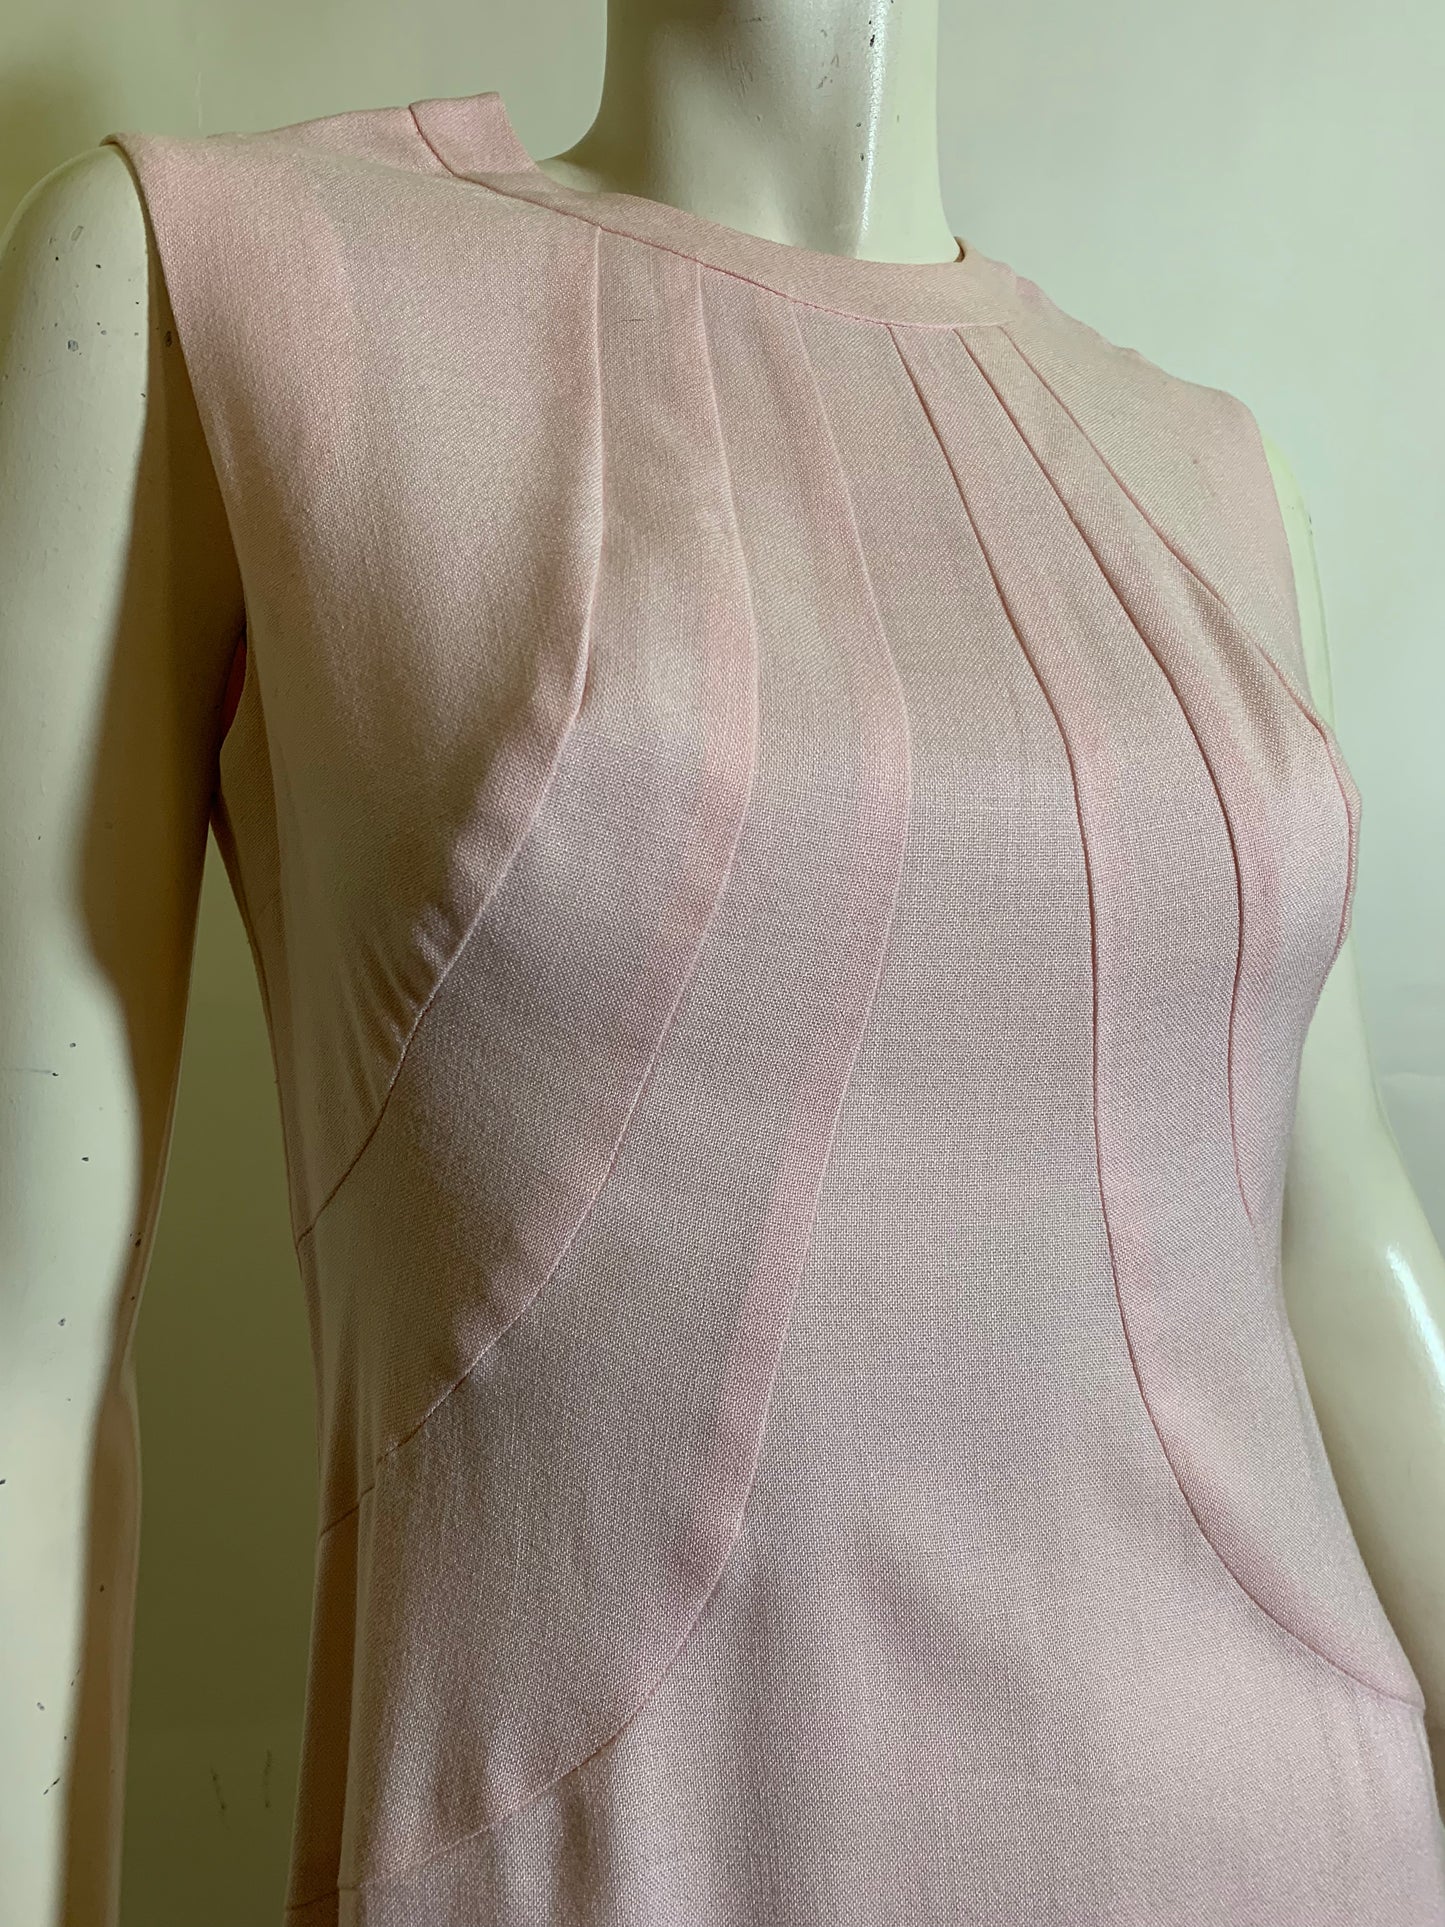 Shell Pink Seamed Sleeveless Sheath Dress circa 1960s